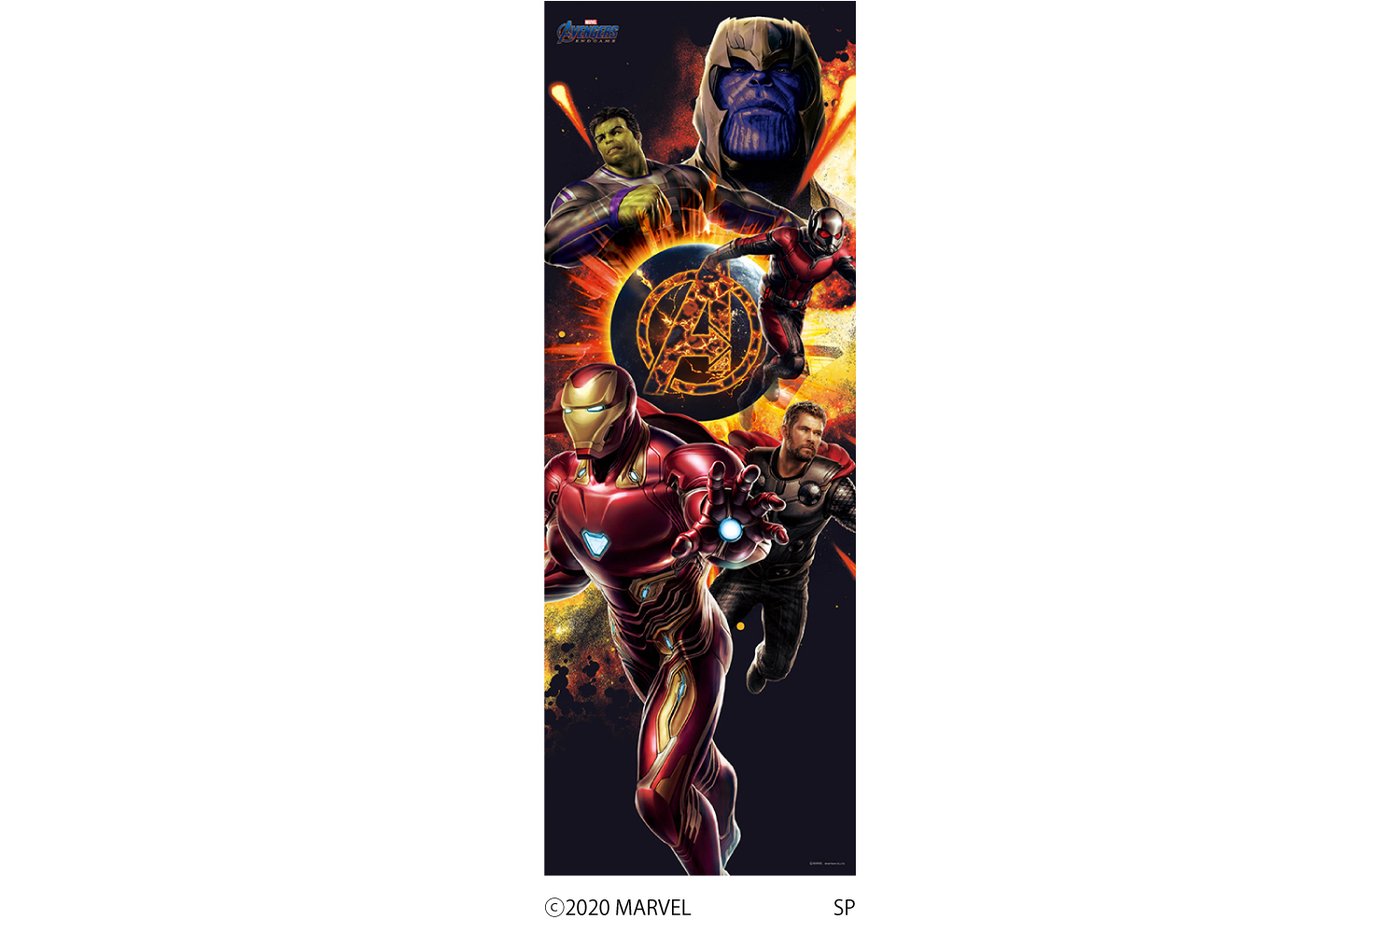 Marvel マーベル Avengers Endgame 壁紙素材ウォールステッカー 2シートタイプ アイアンマン ハルク Wall Paper M019 2 プリテック Msselectronics Gr